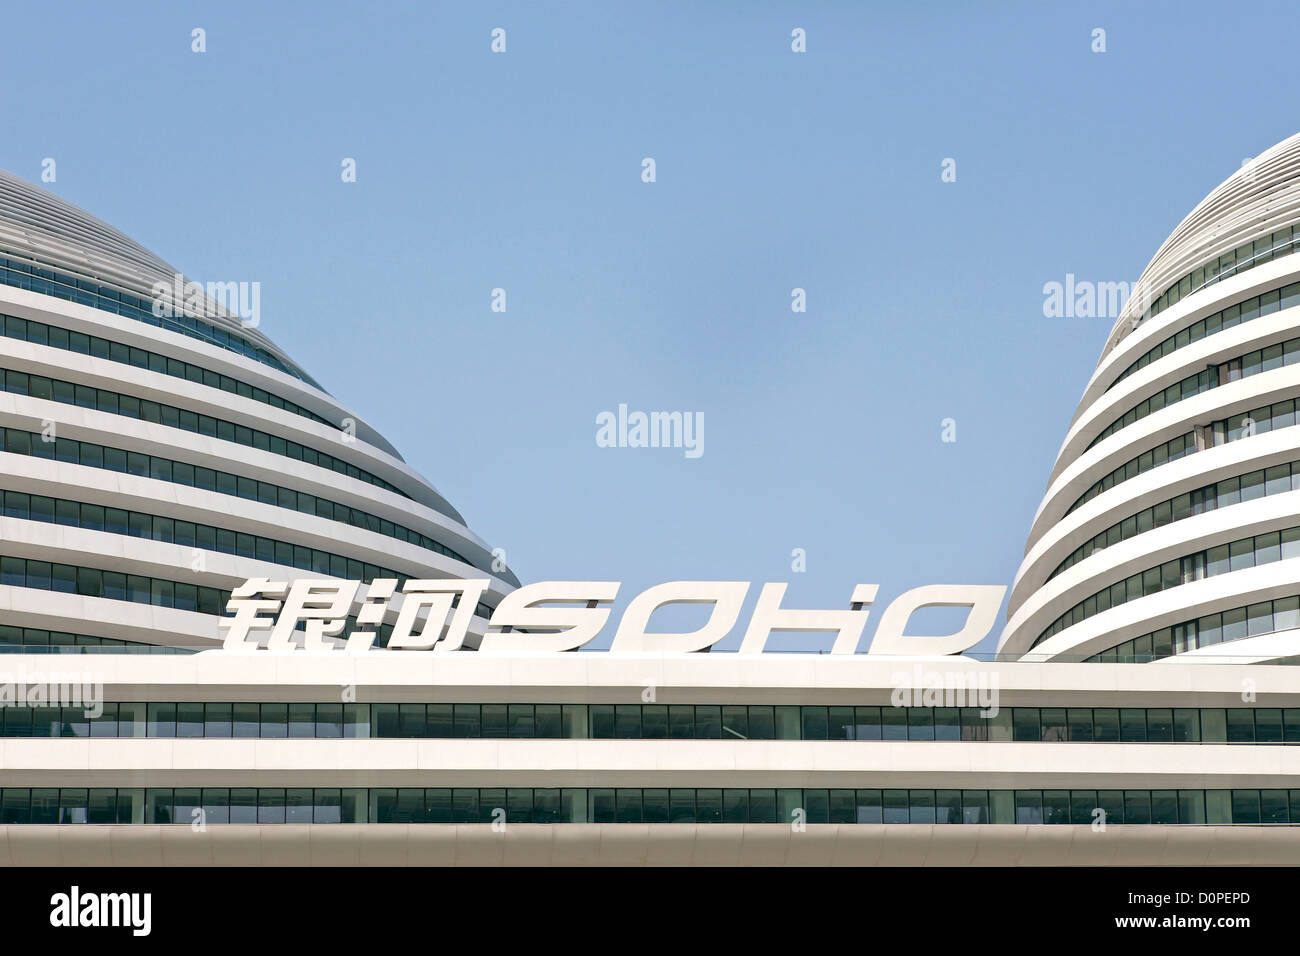 Galaxy-Soho, Peking, China. Architekt: Zaha Hadid Architects, 2012. Teilansicht der Kuppeln mit Logo. Stockfoto